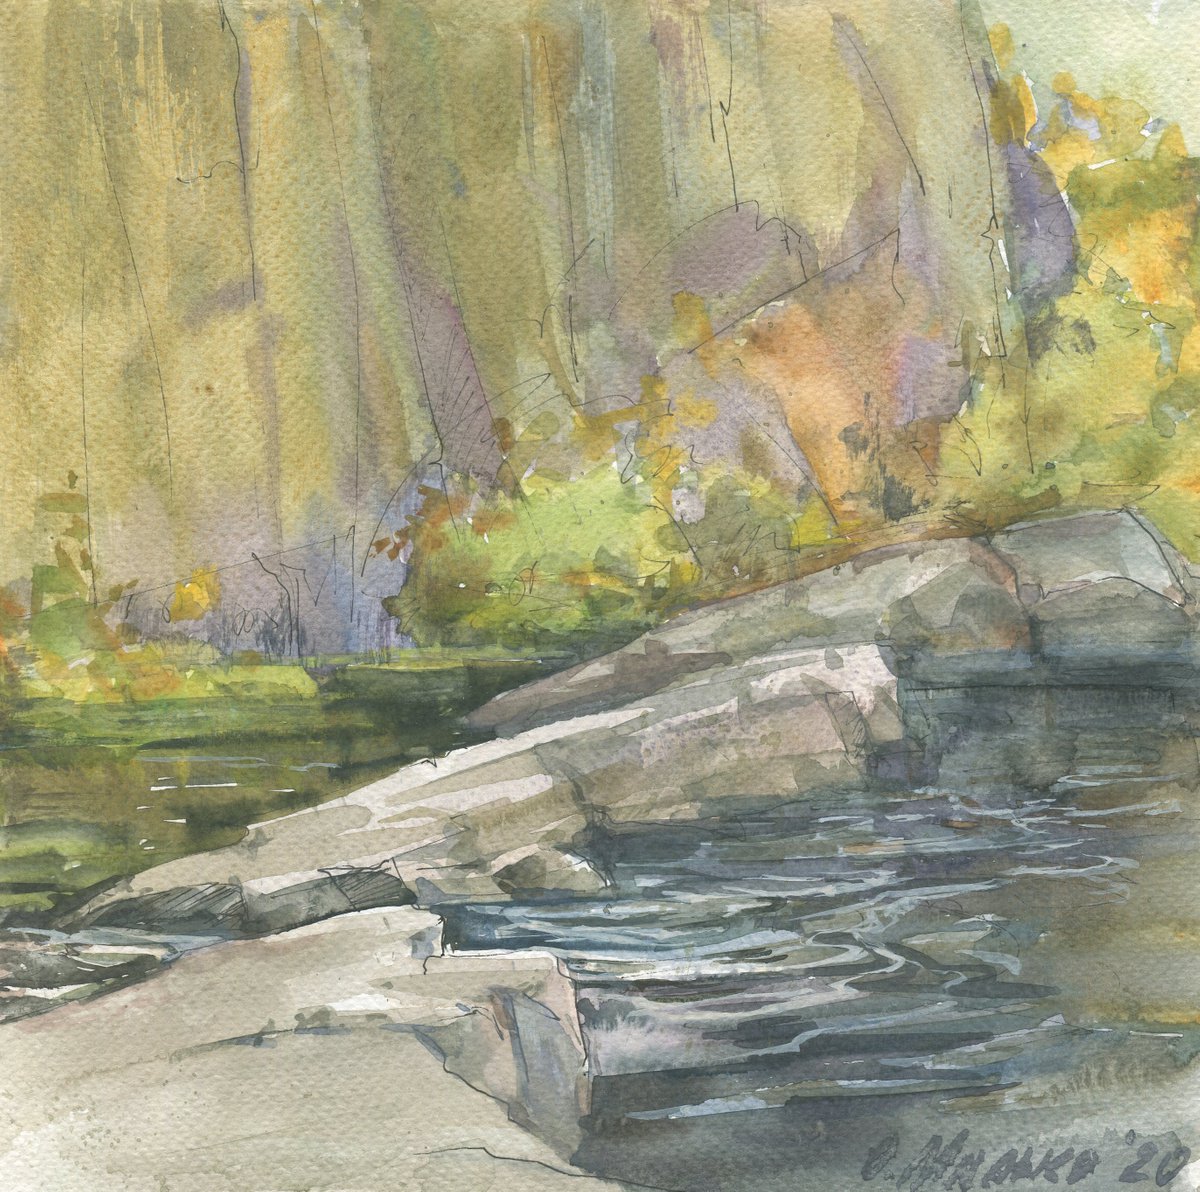 Bohuslav rocks. Streaming through rocks and stones / Original watercolor painting. River s... by Olha Malko